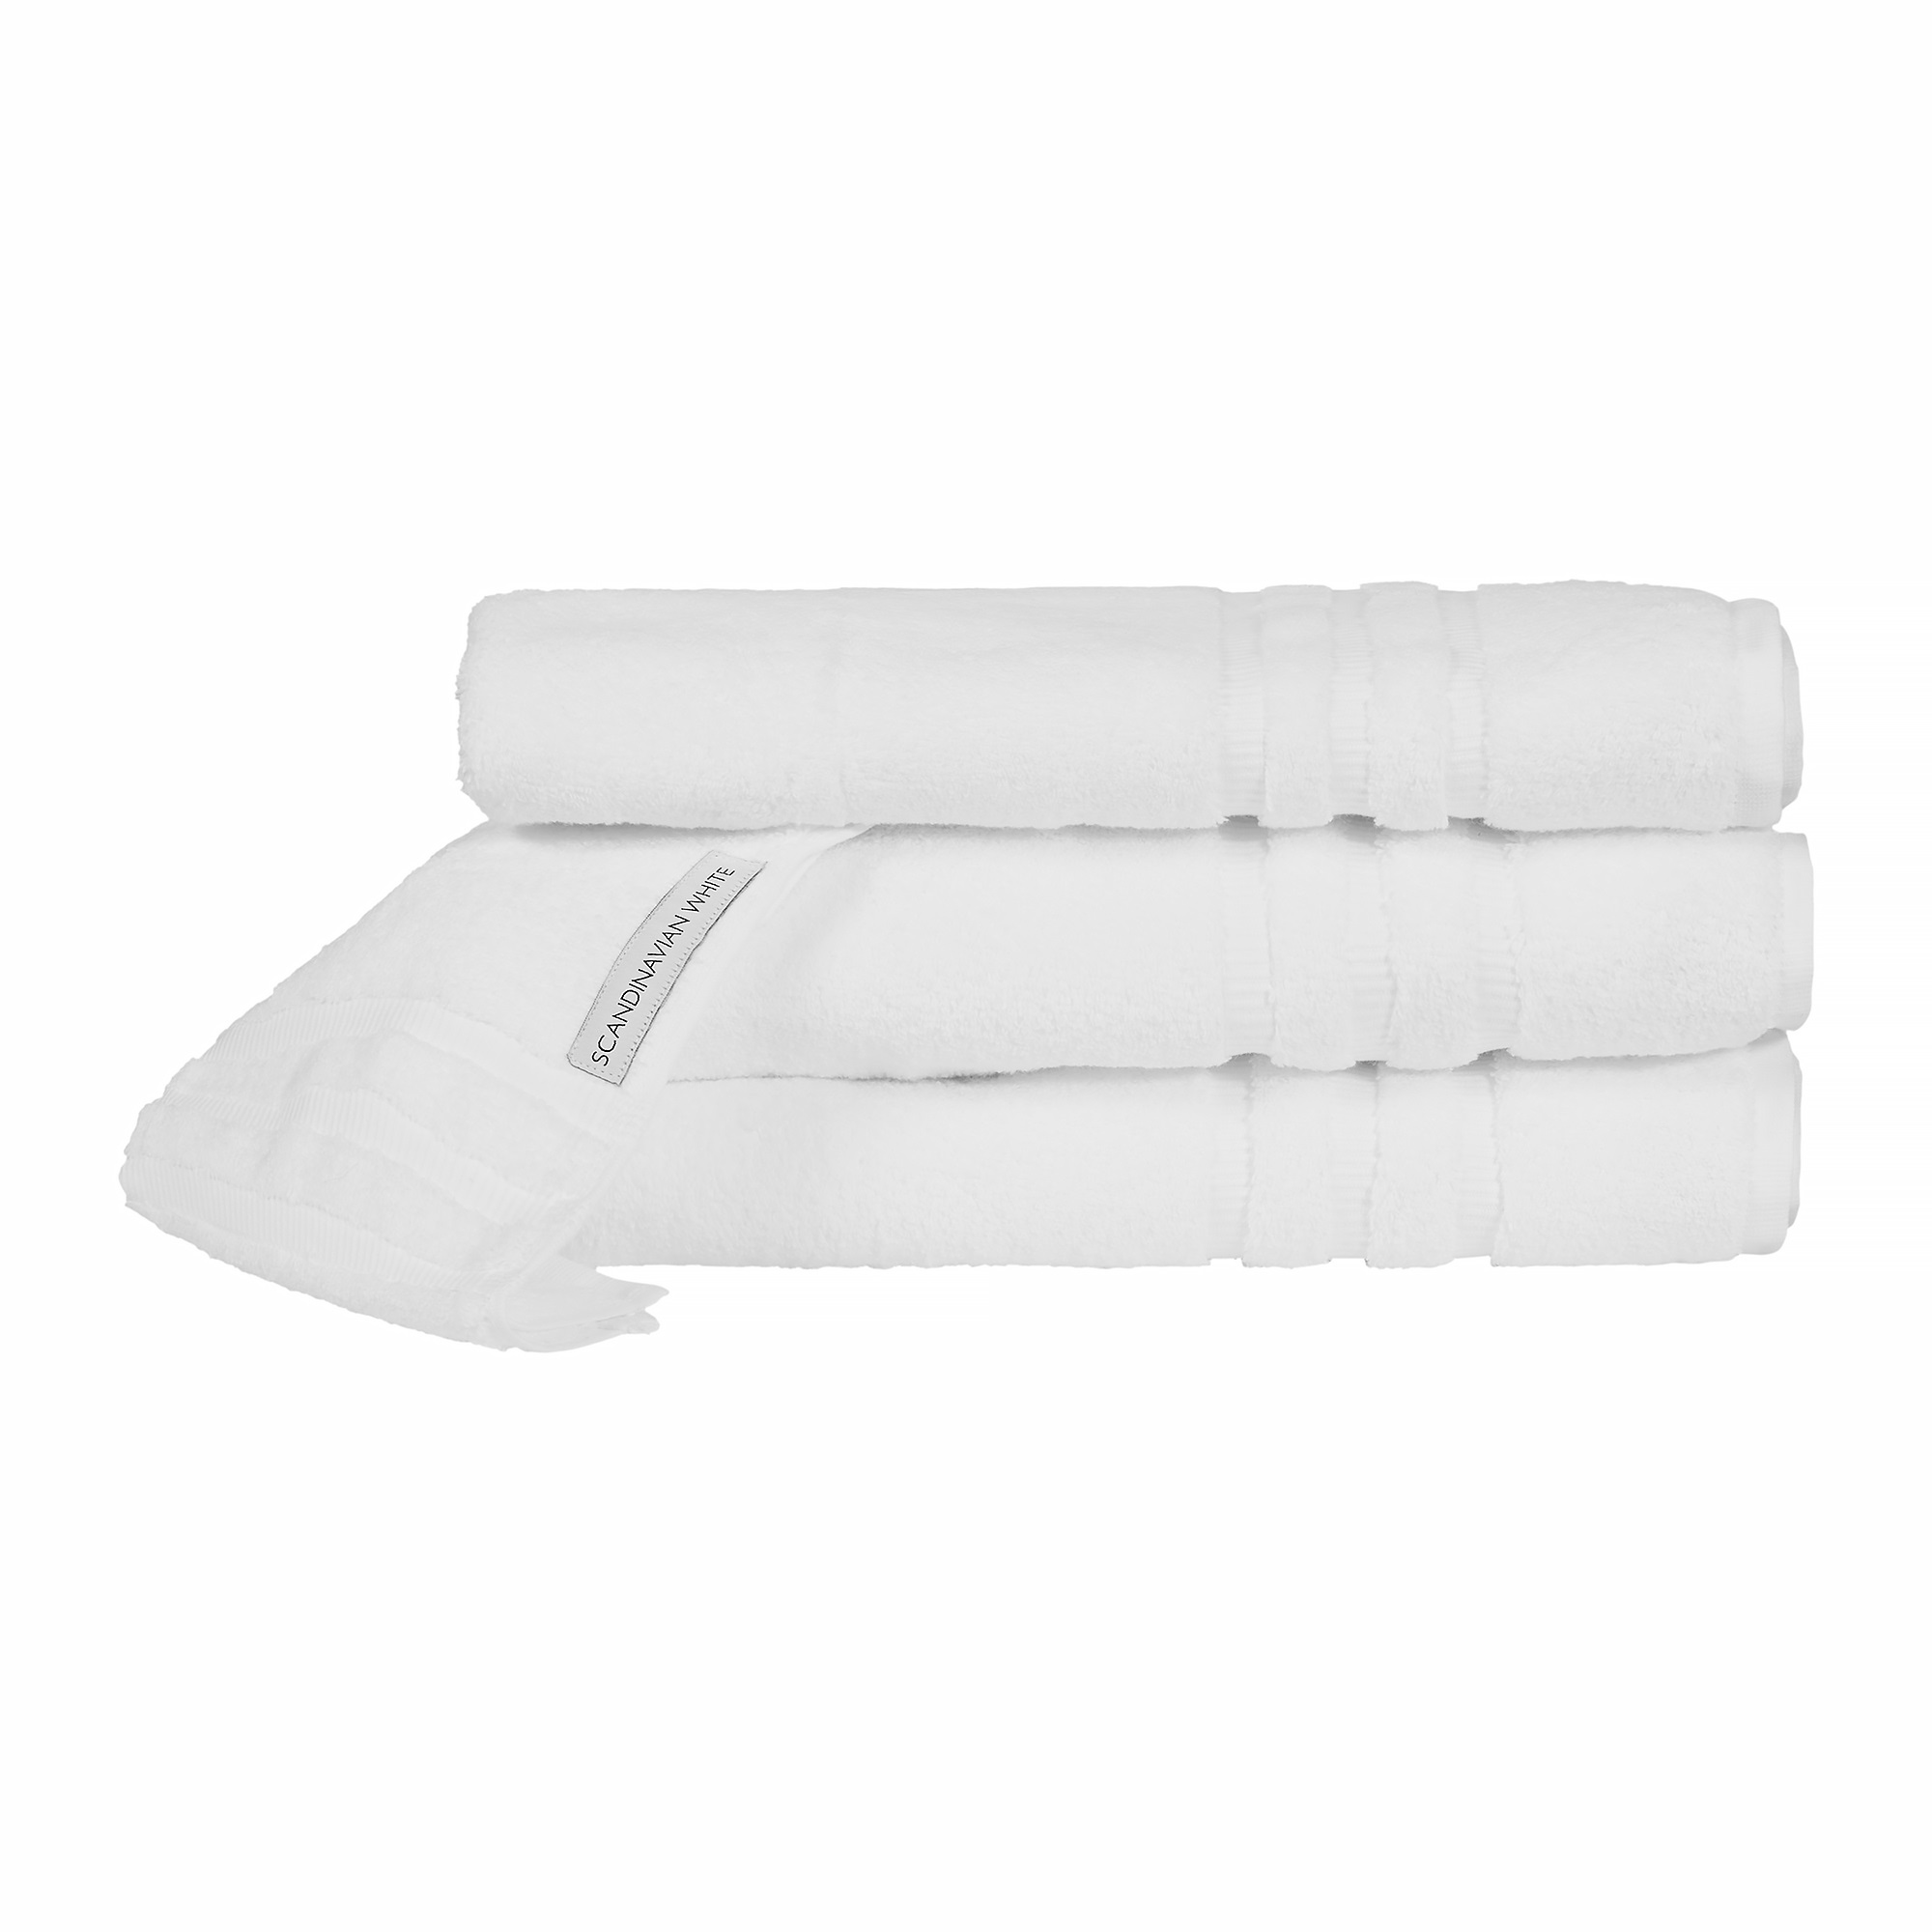 Towel Scandinavian White 40x70 cm 600 g, White